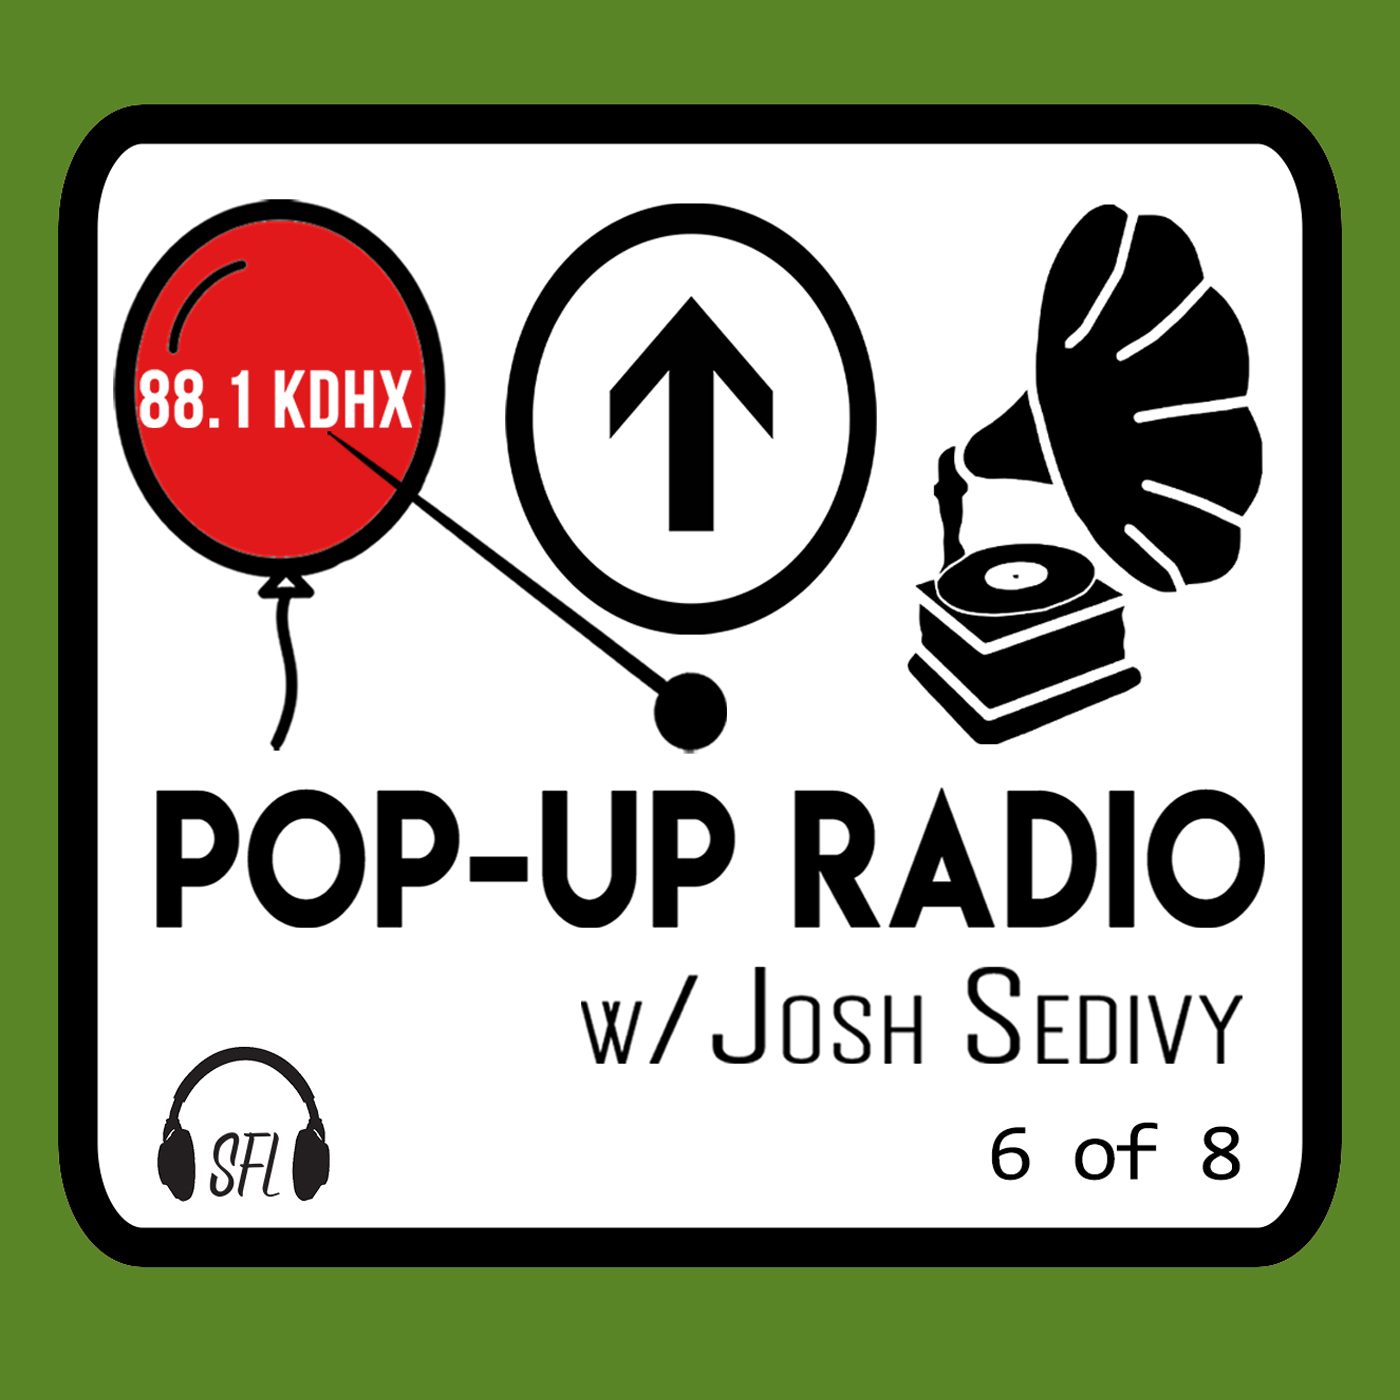 Pop-Up Radio on KDHX - Episode 6